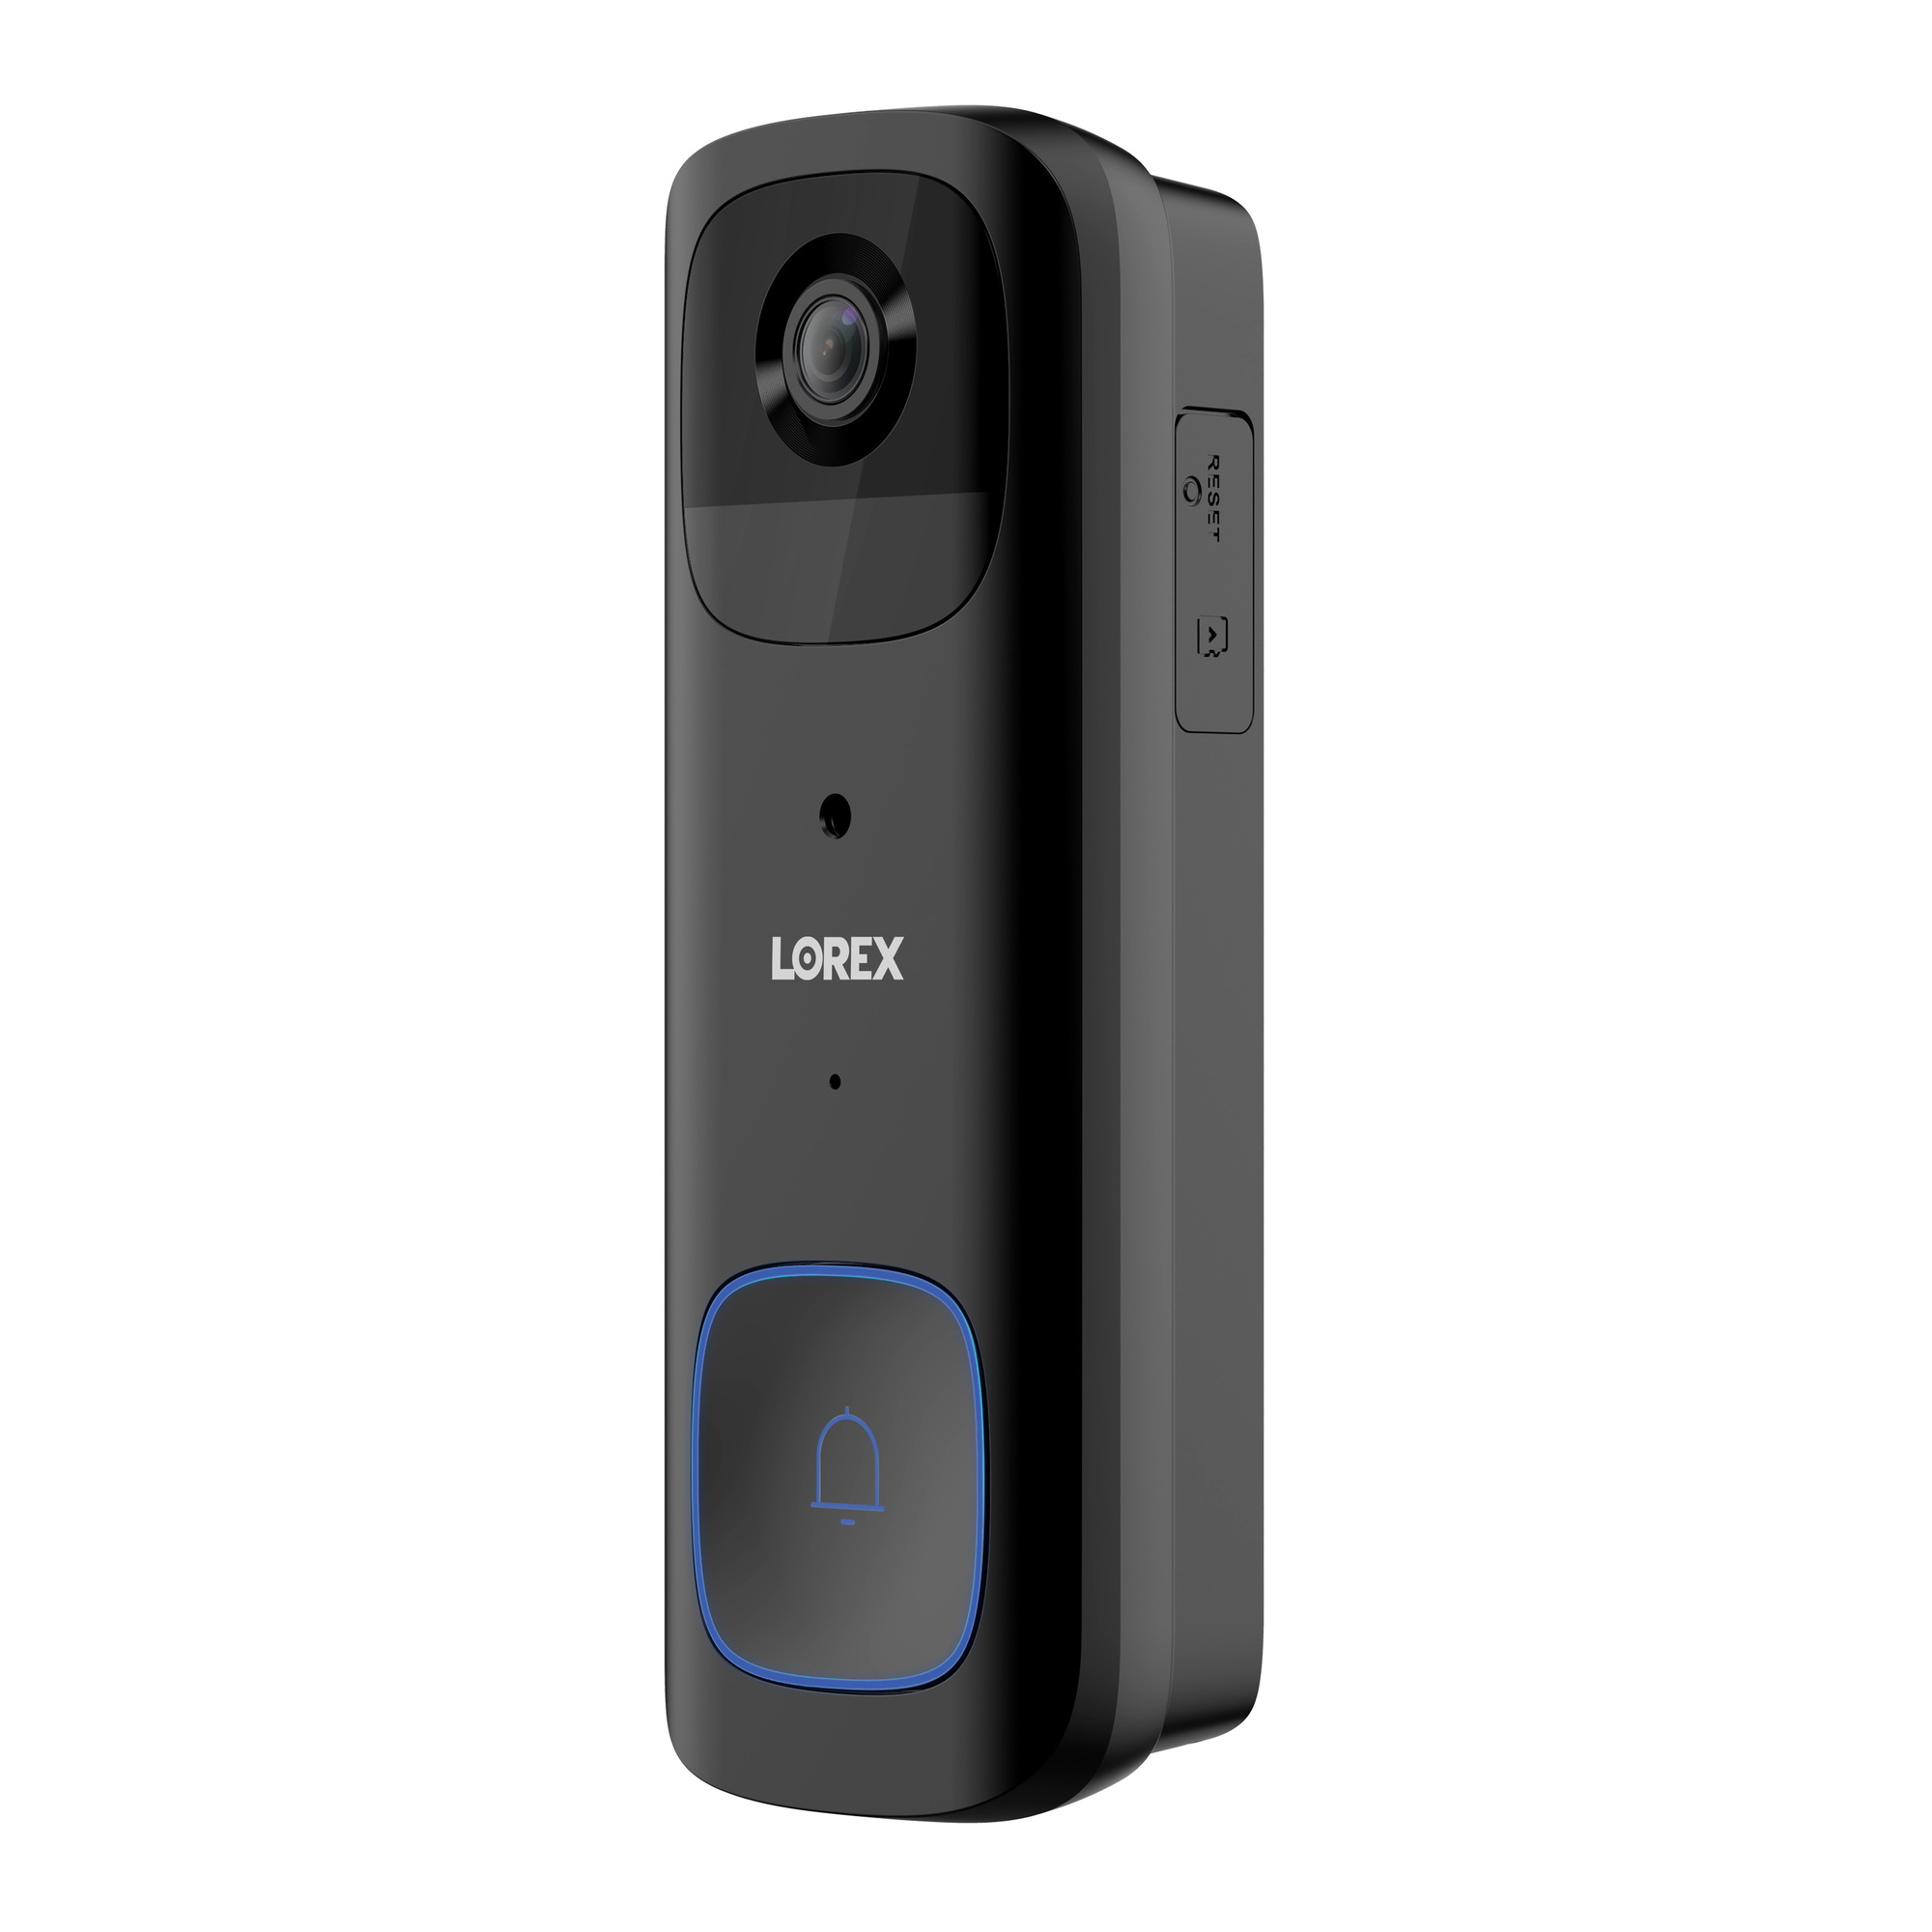 Lorex, 2K Battery Video Doorbell Black, Product Style DVR/monitoring kit, Camera (qty.) 1 Resolution 2K, Model B463AJDB-E